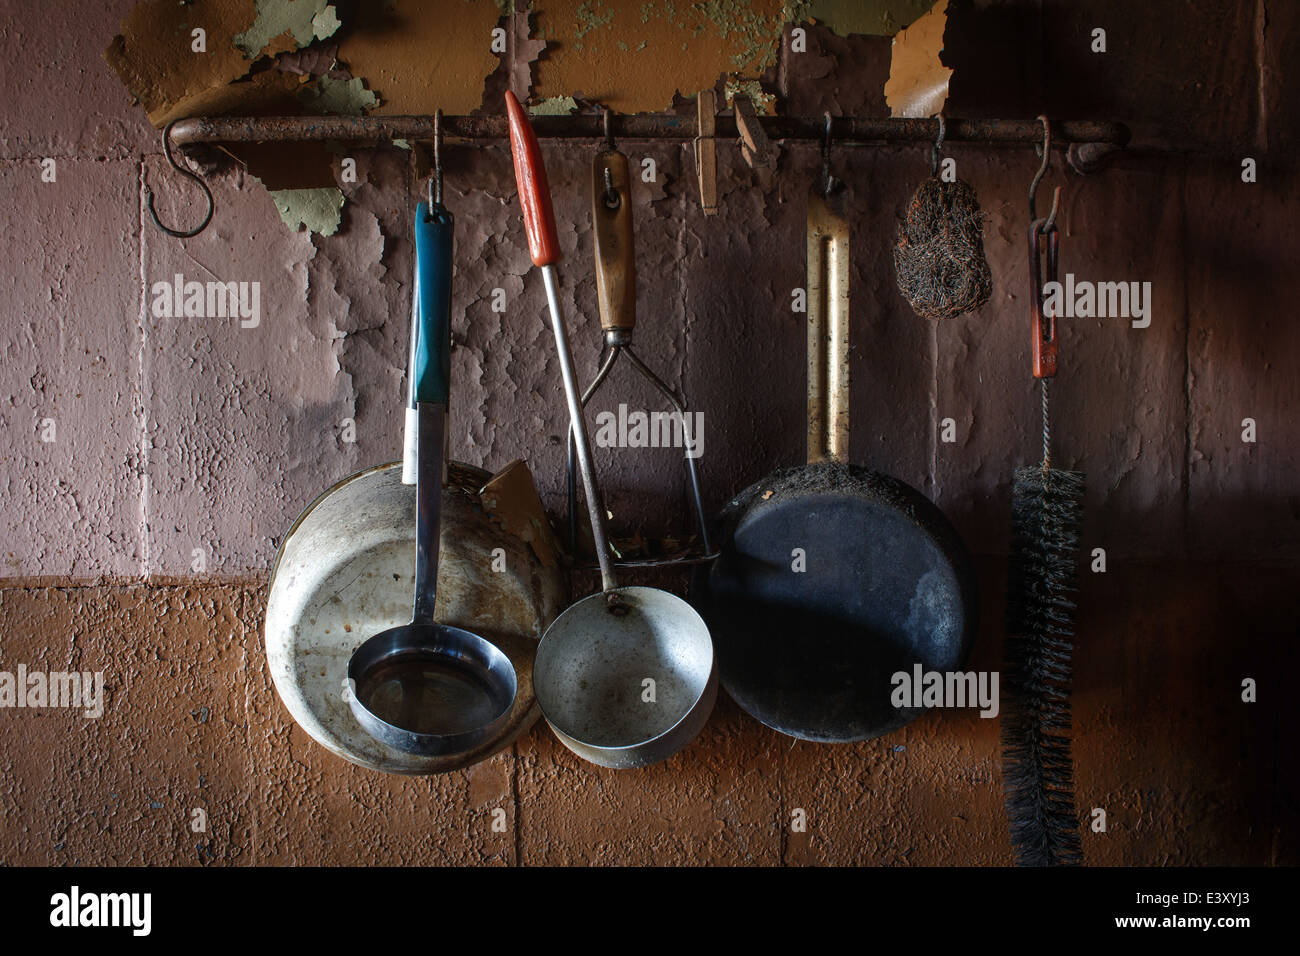 Vintage kitchen instruments haning on wall Stock Photo